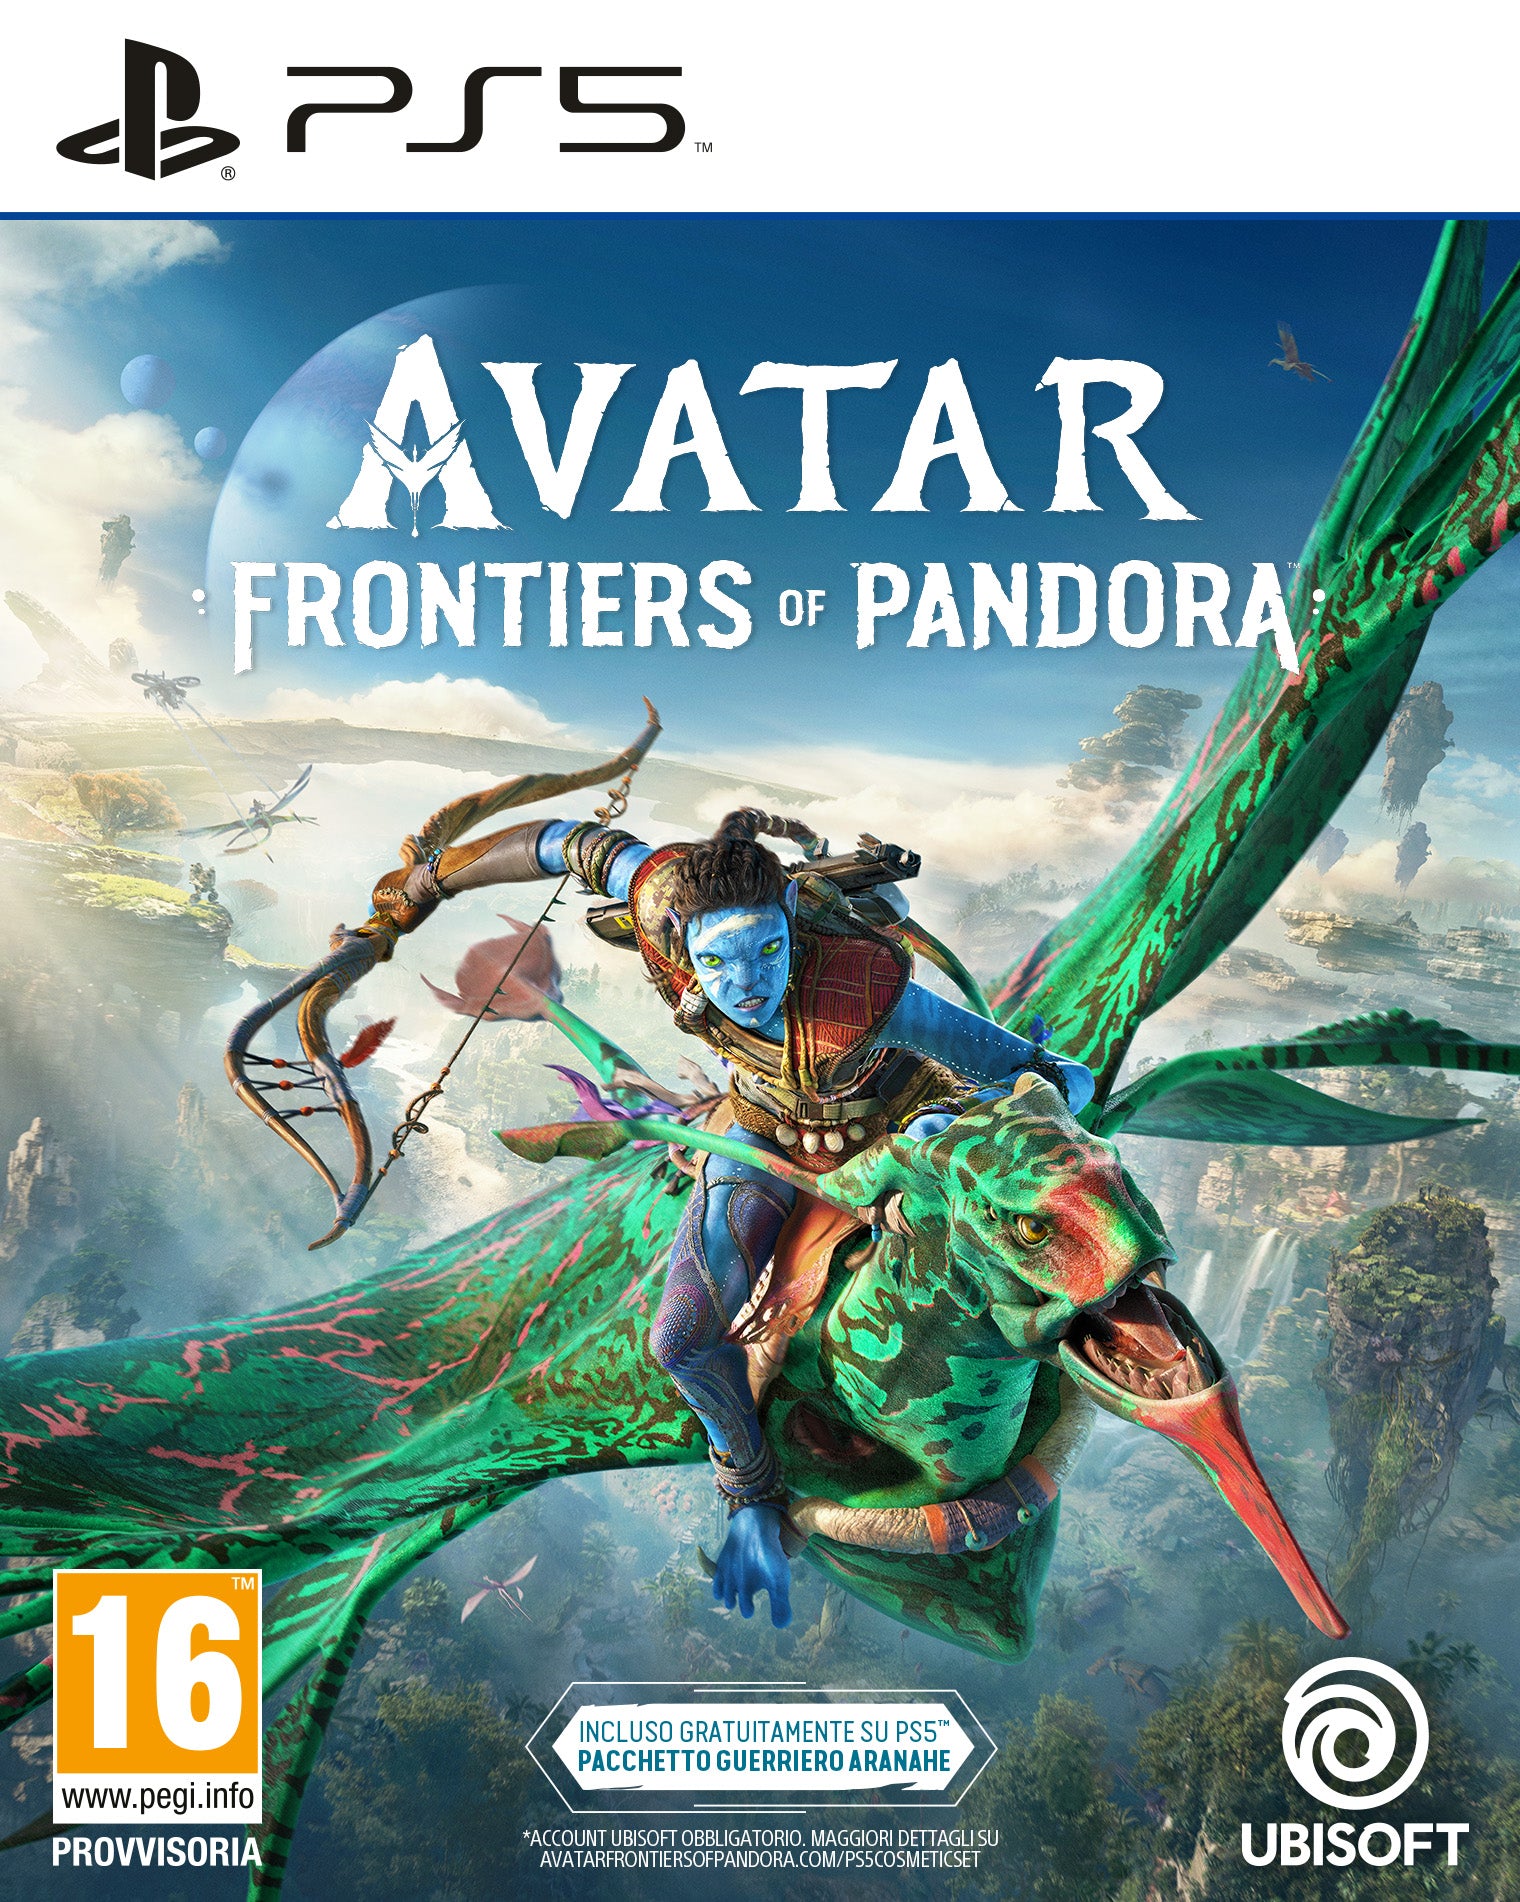 PS5 Avatar : Frontiers Of Pandora - Disponibile in 2/3 giorni lavorativi Ubisoft